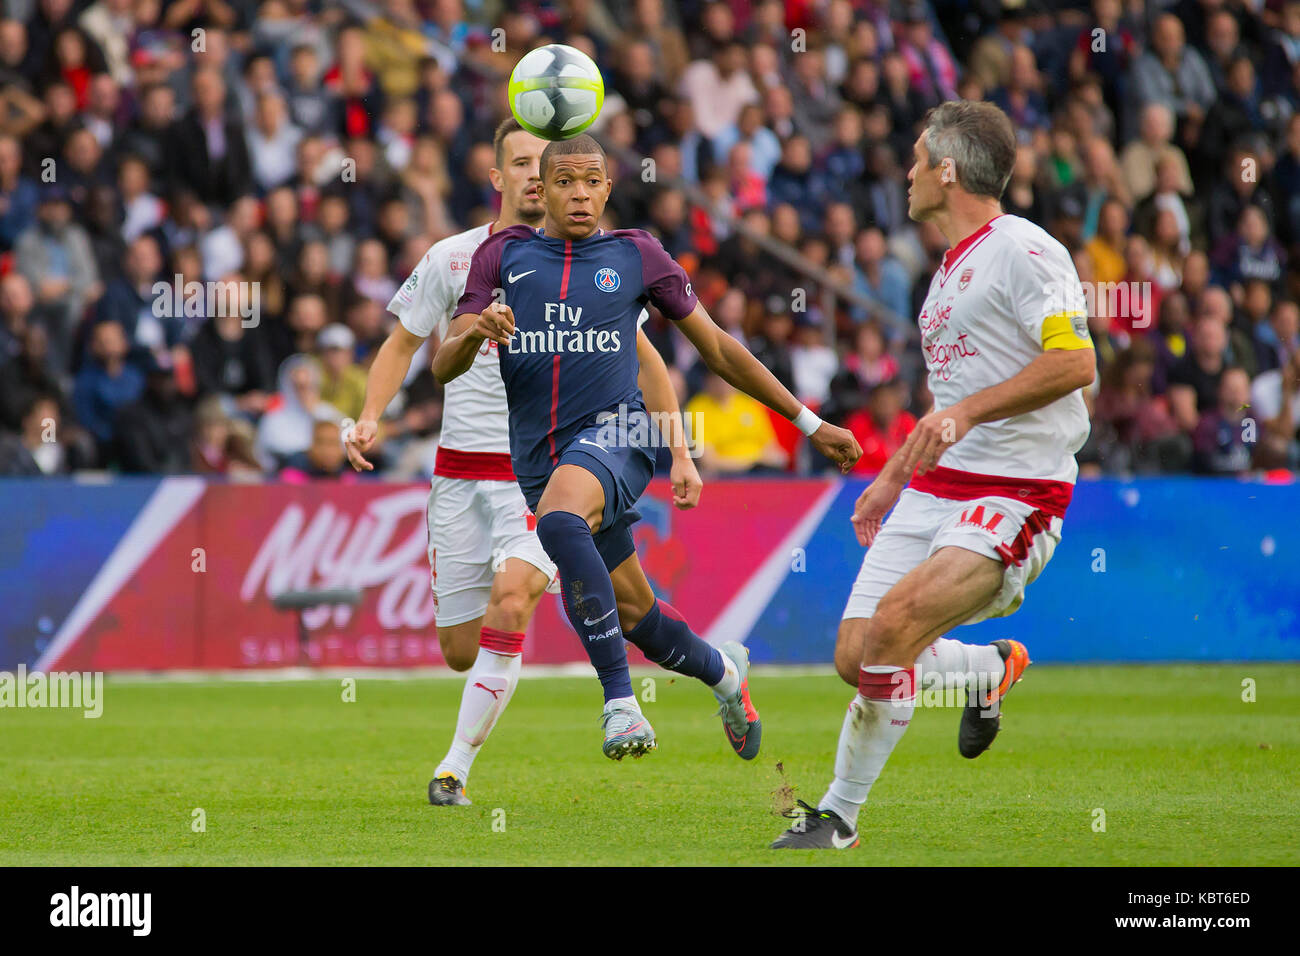 Kylian Mbappe in action during the French Ligue 1 soccer match between Paris Saint Germain (PSG) and Bordeaux at Parc des Princes. The match was won 6-2 by Paris Saint Germain. Stock Photo